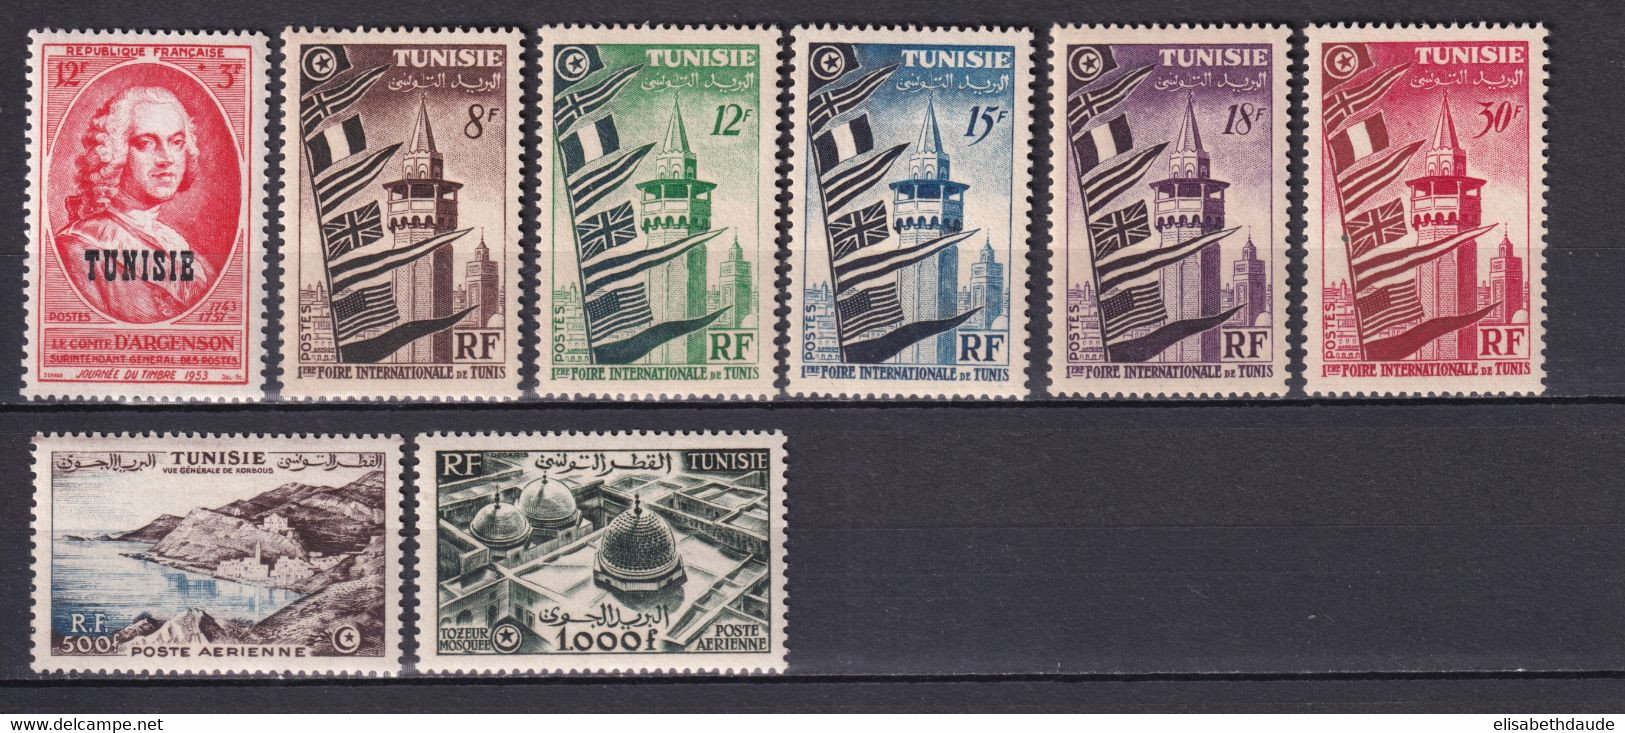 TUNISIE - 1953 - ANNEE COMPLETE AVEC POSTE AERIENNE - YVERT N° 359/364 +A18/19 * MLH - COTE = 111 EUR. - Unused Stamps